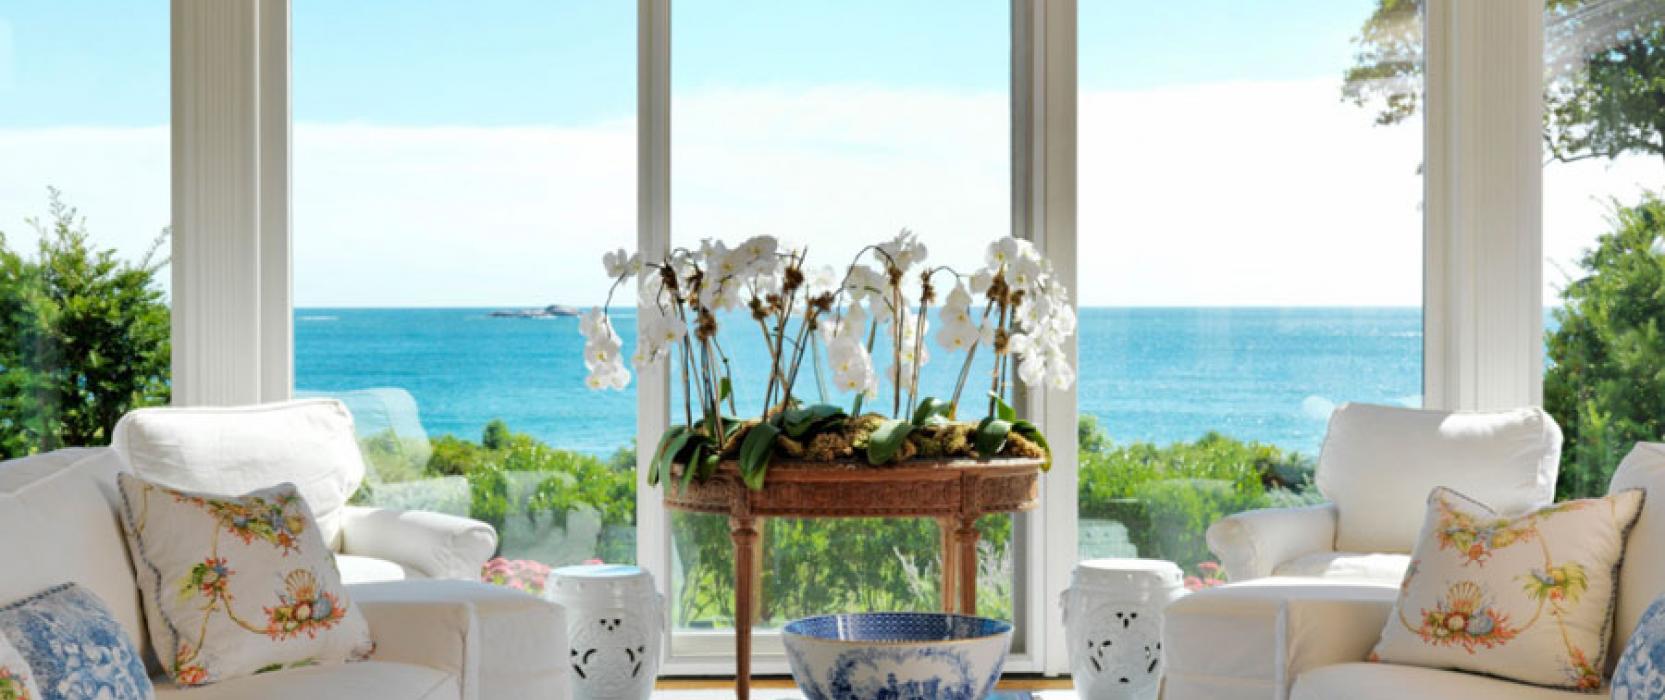 Wilson Kelsey Design named one of Ocean Home's 50 Best Coastal Interior Designers